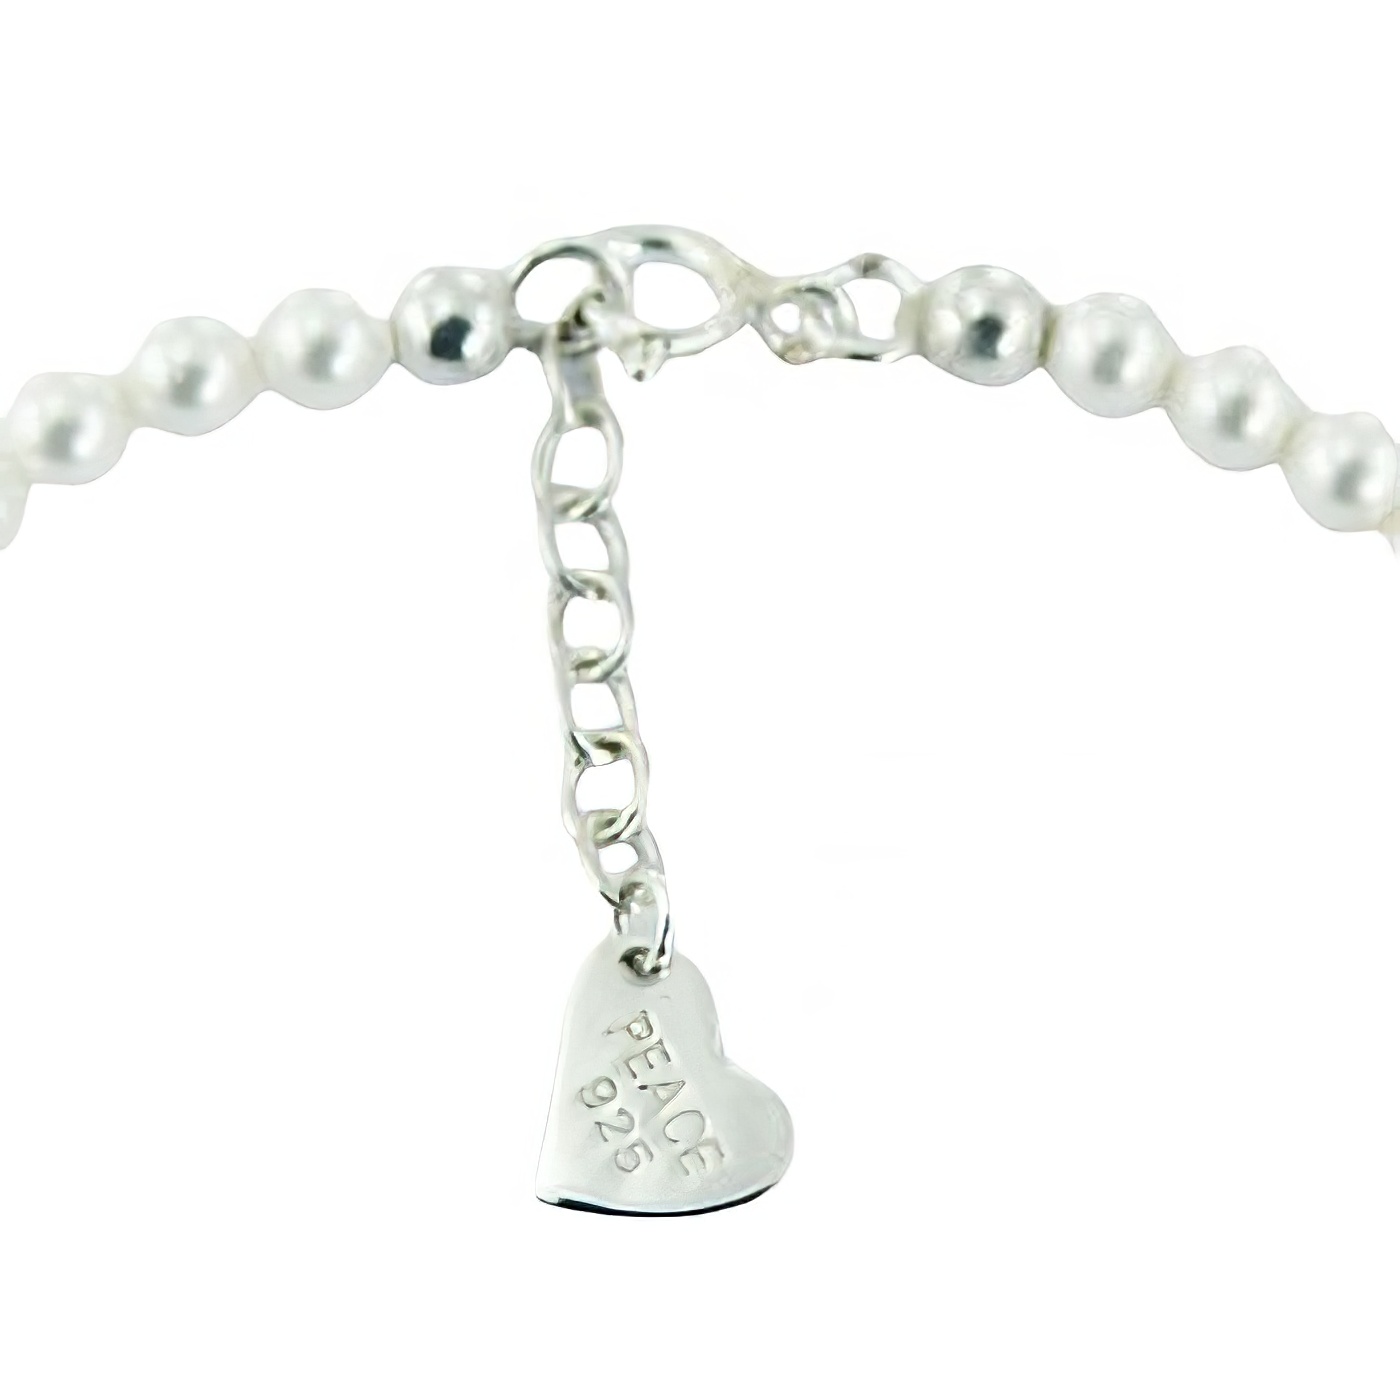 Swarovski Crystal Pearl Bracelet Polished Silver Heart Charm by BeYindi 